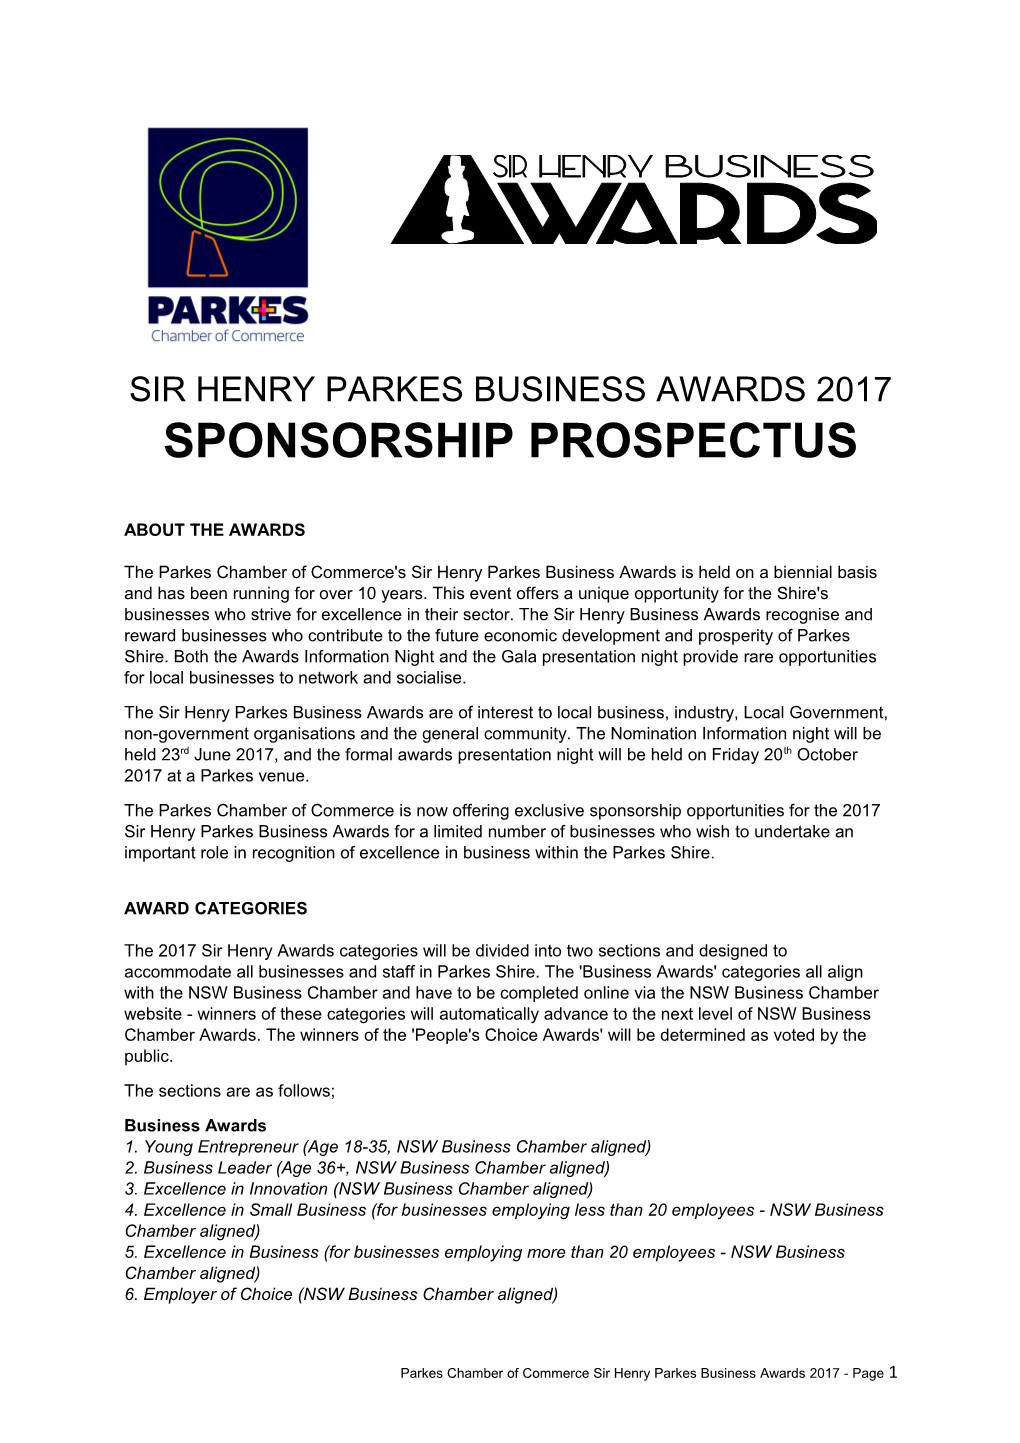 Sirhenry Parkes Business Awards 2017 Sponsorship Prospectus